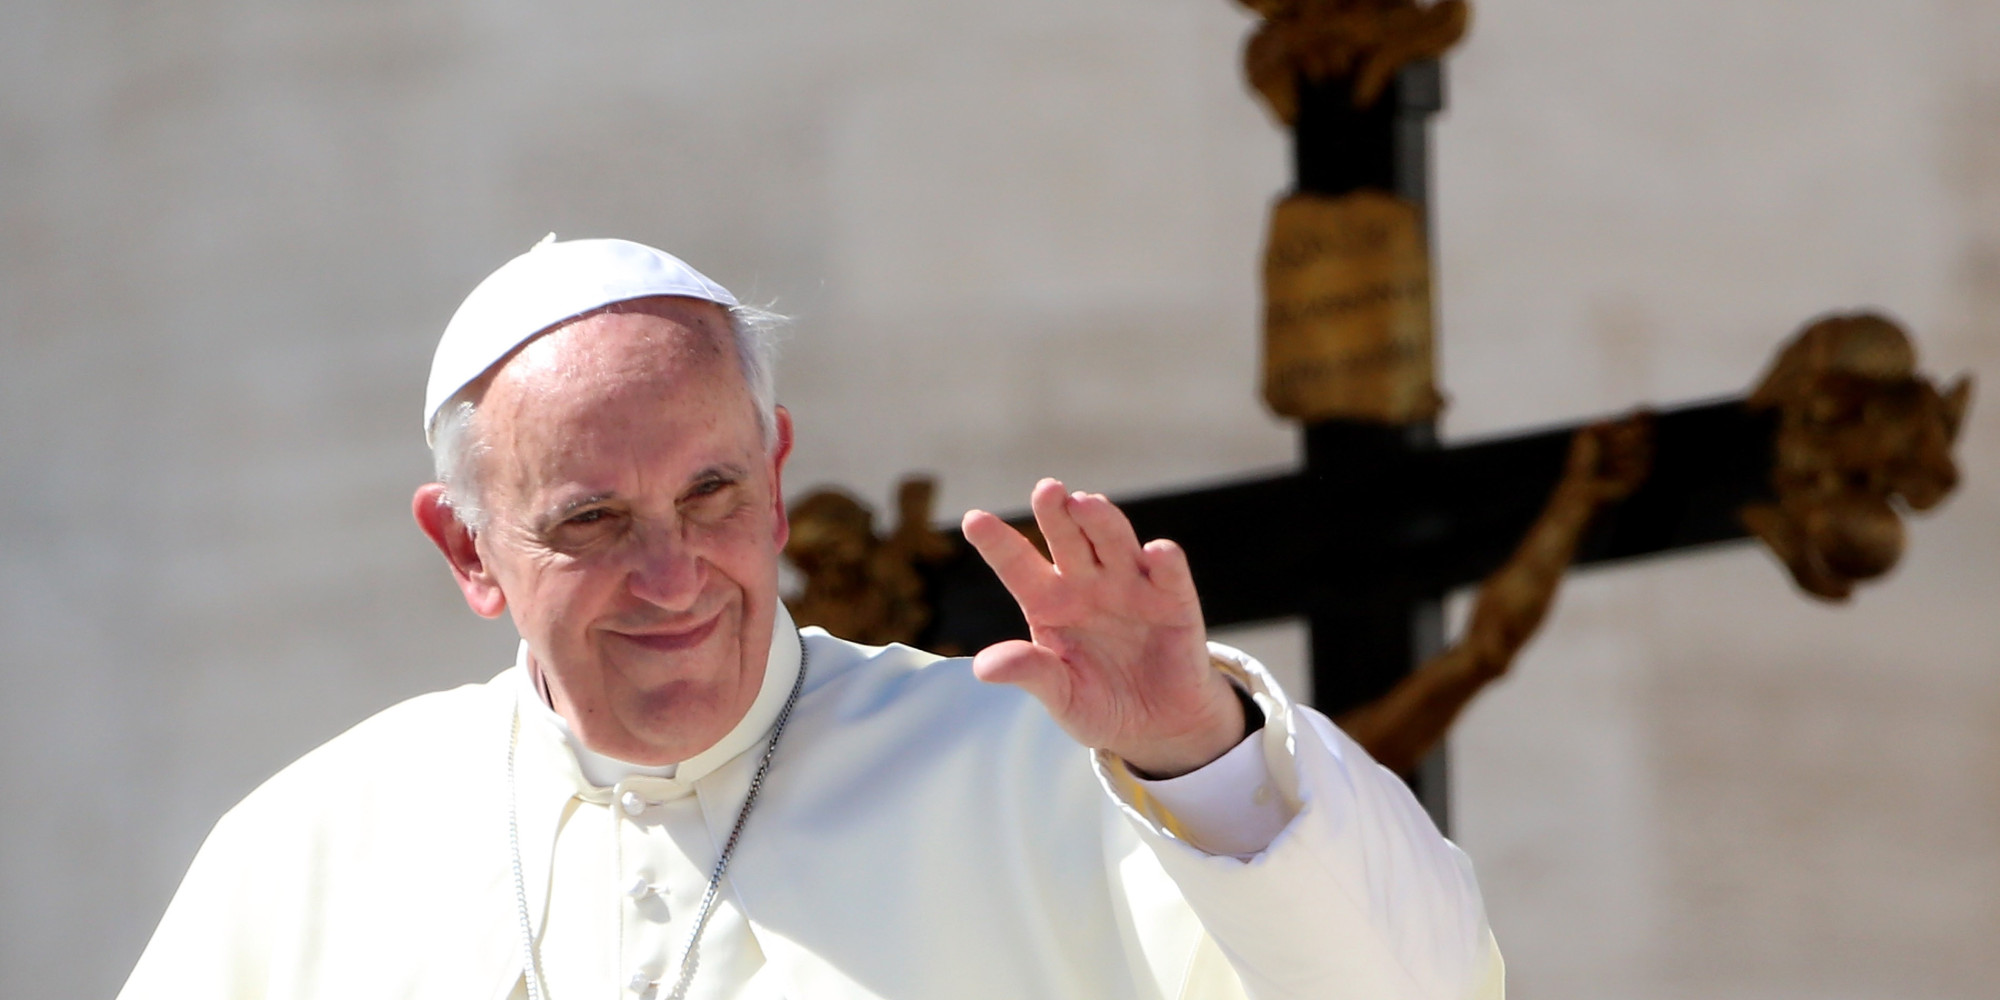 Papa Francisco receberá alta do hospital nesta sexta-feira (16)